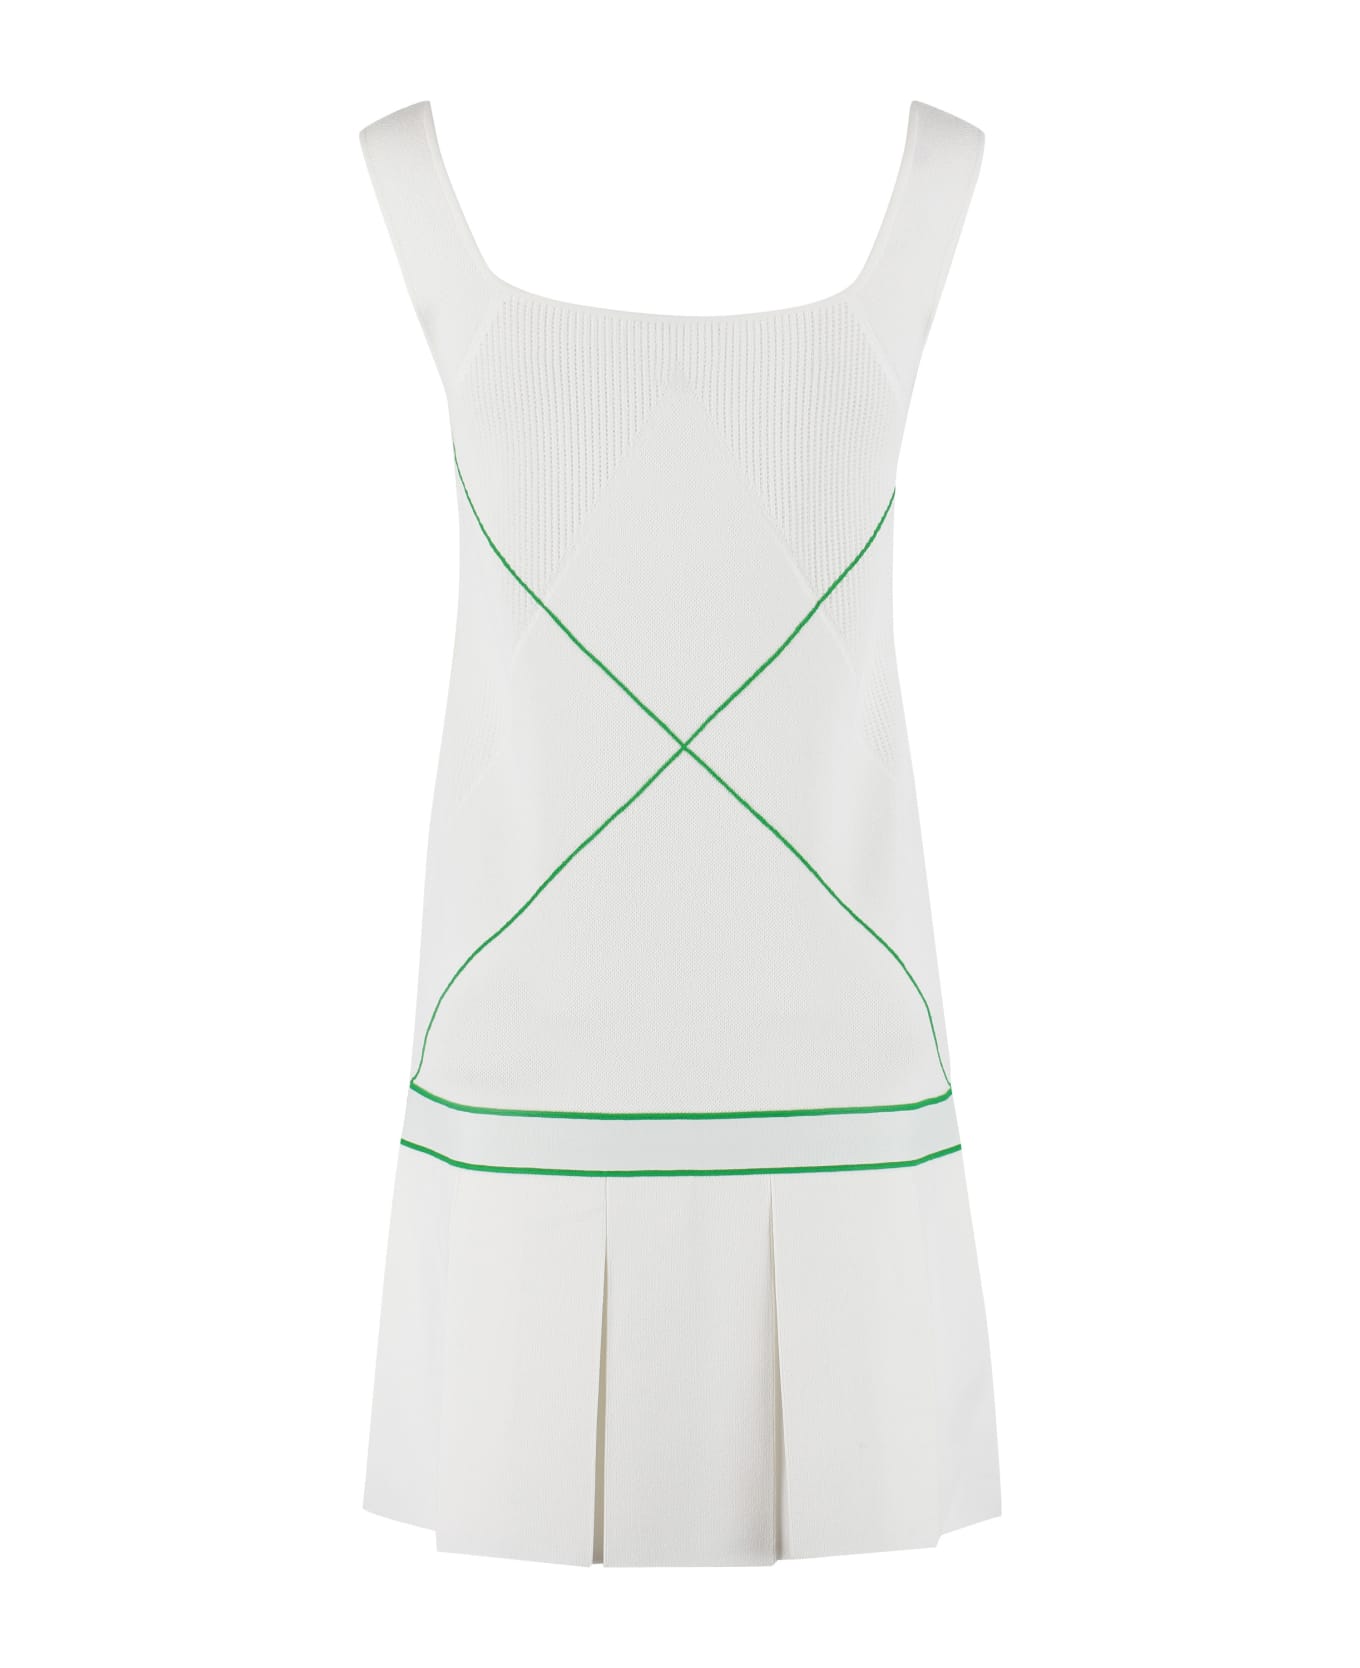 Bottega Veneta Knitted Dress - White